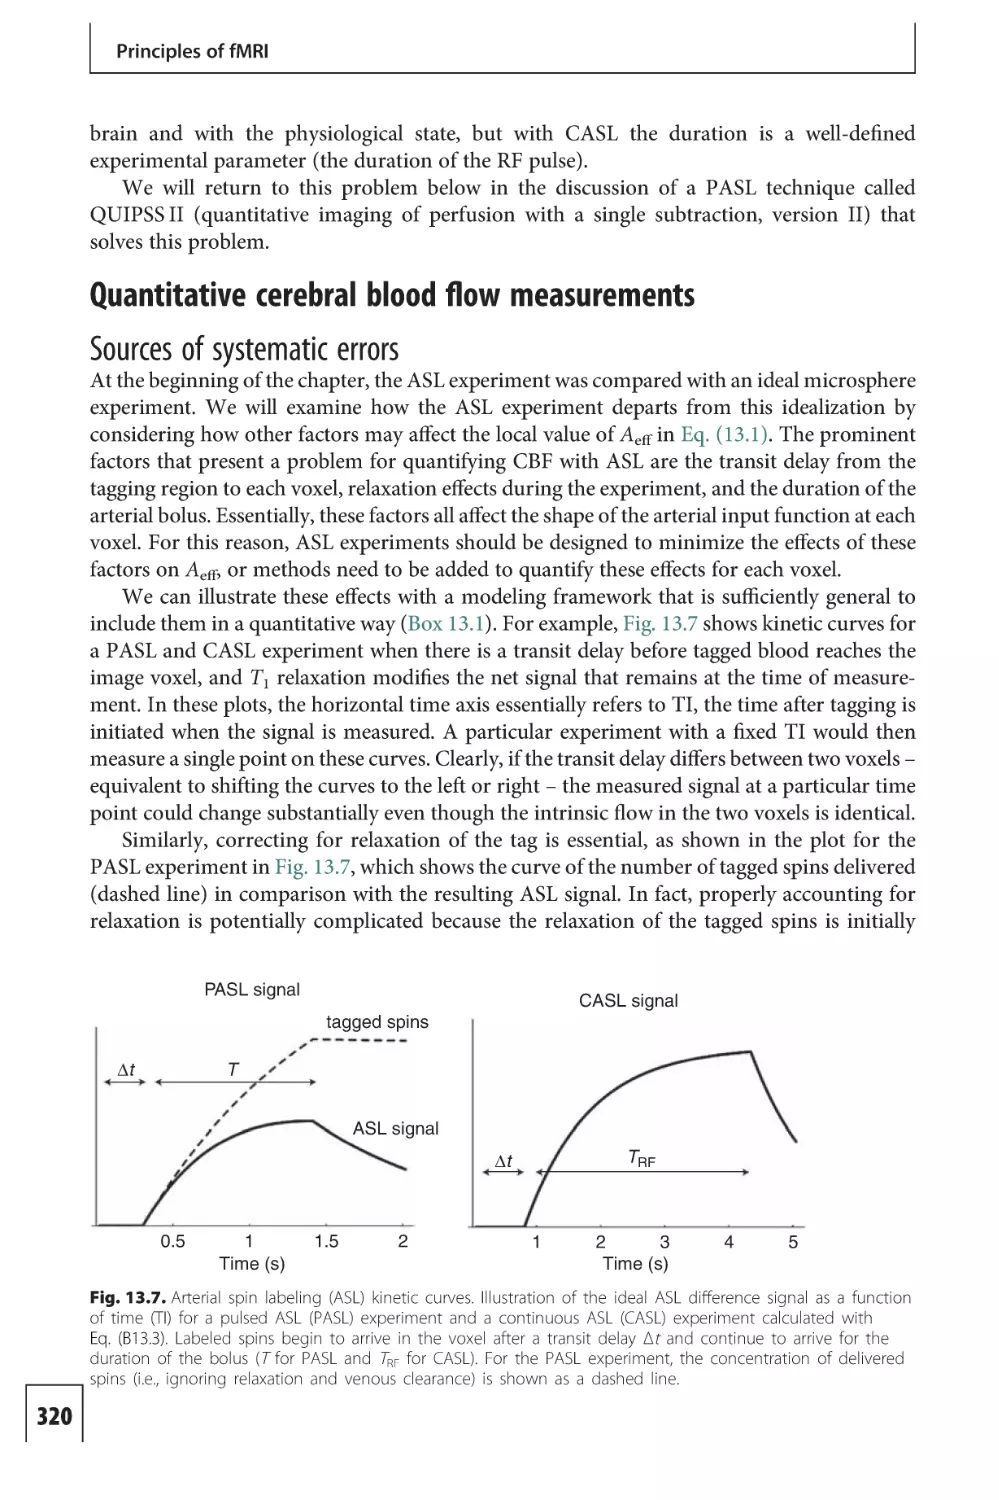 Quantitative cerebral blood flow measurements
Sources of systematic errors